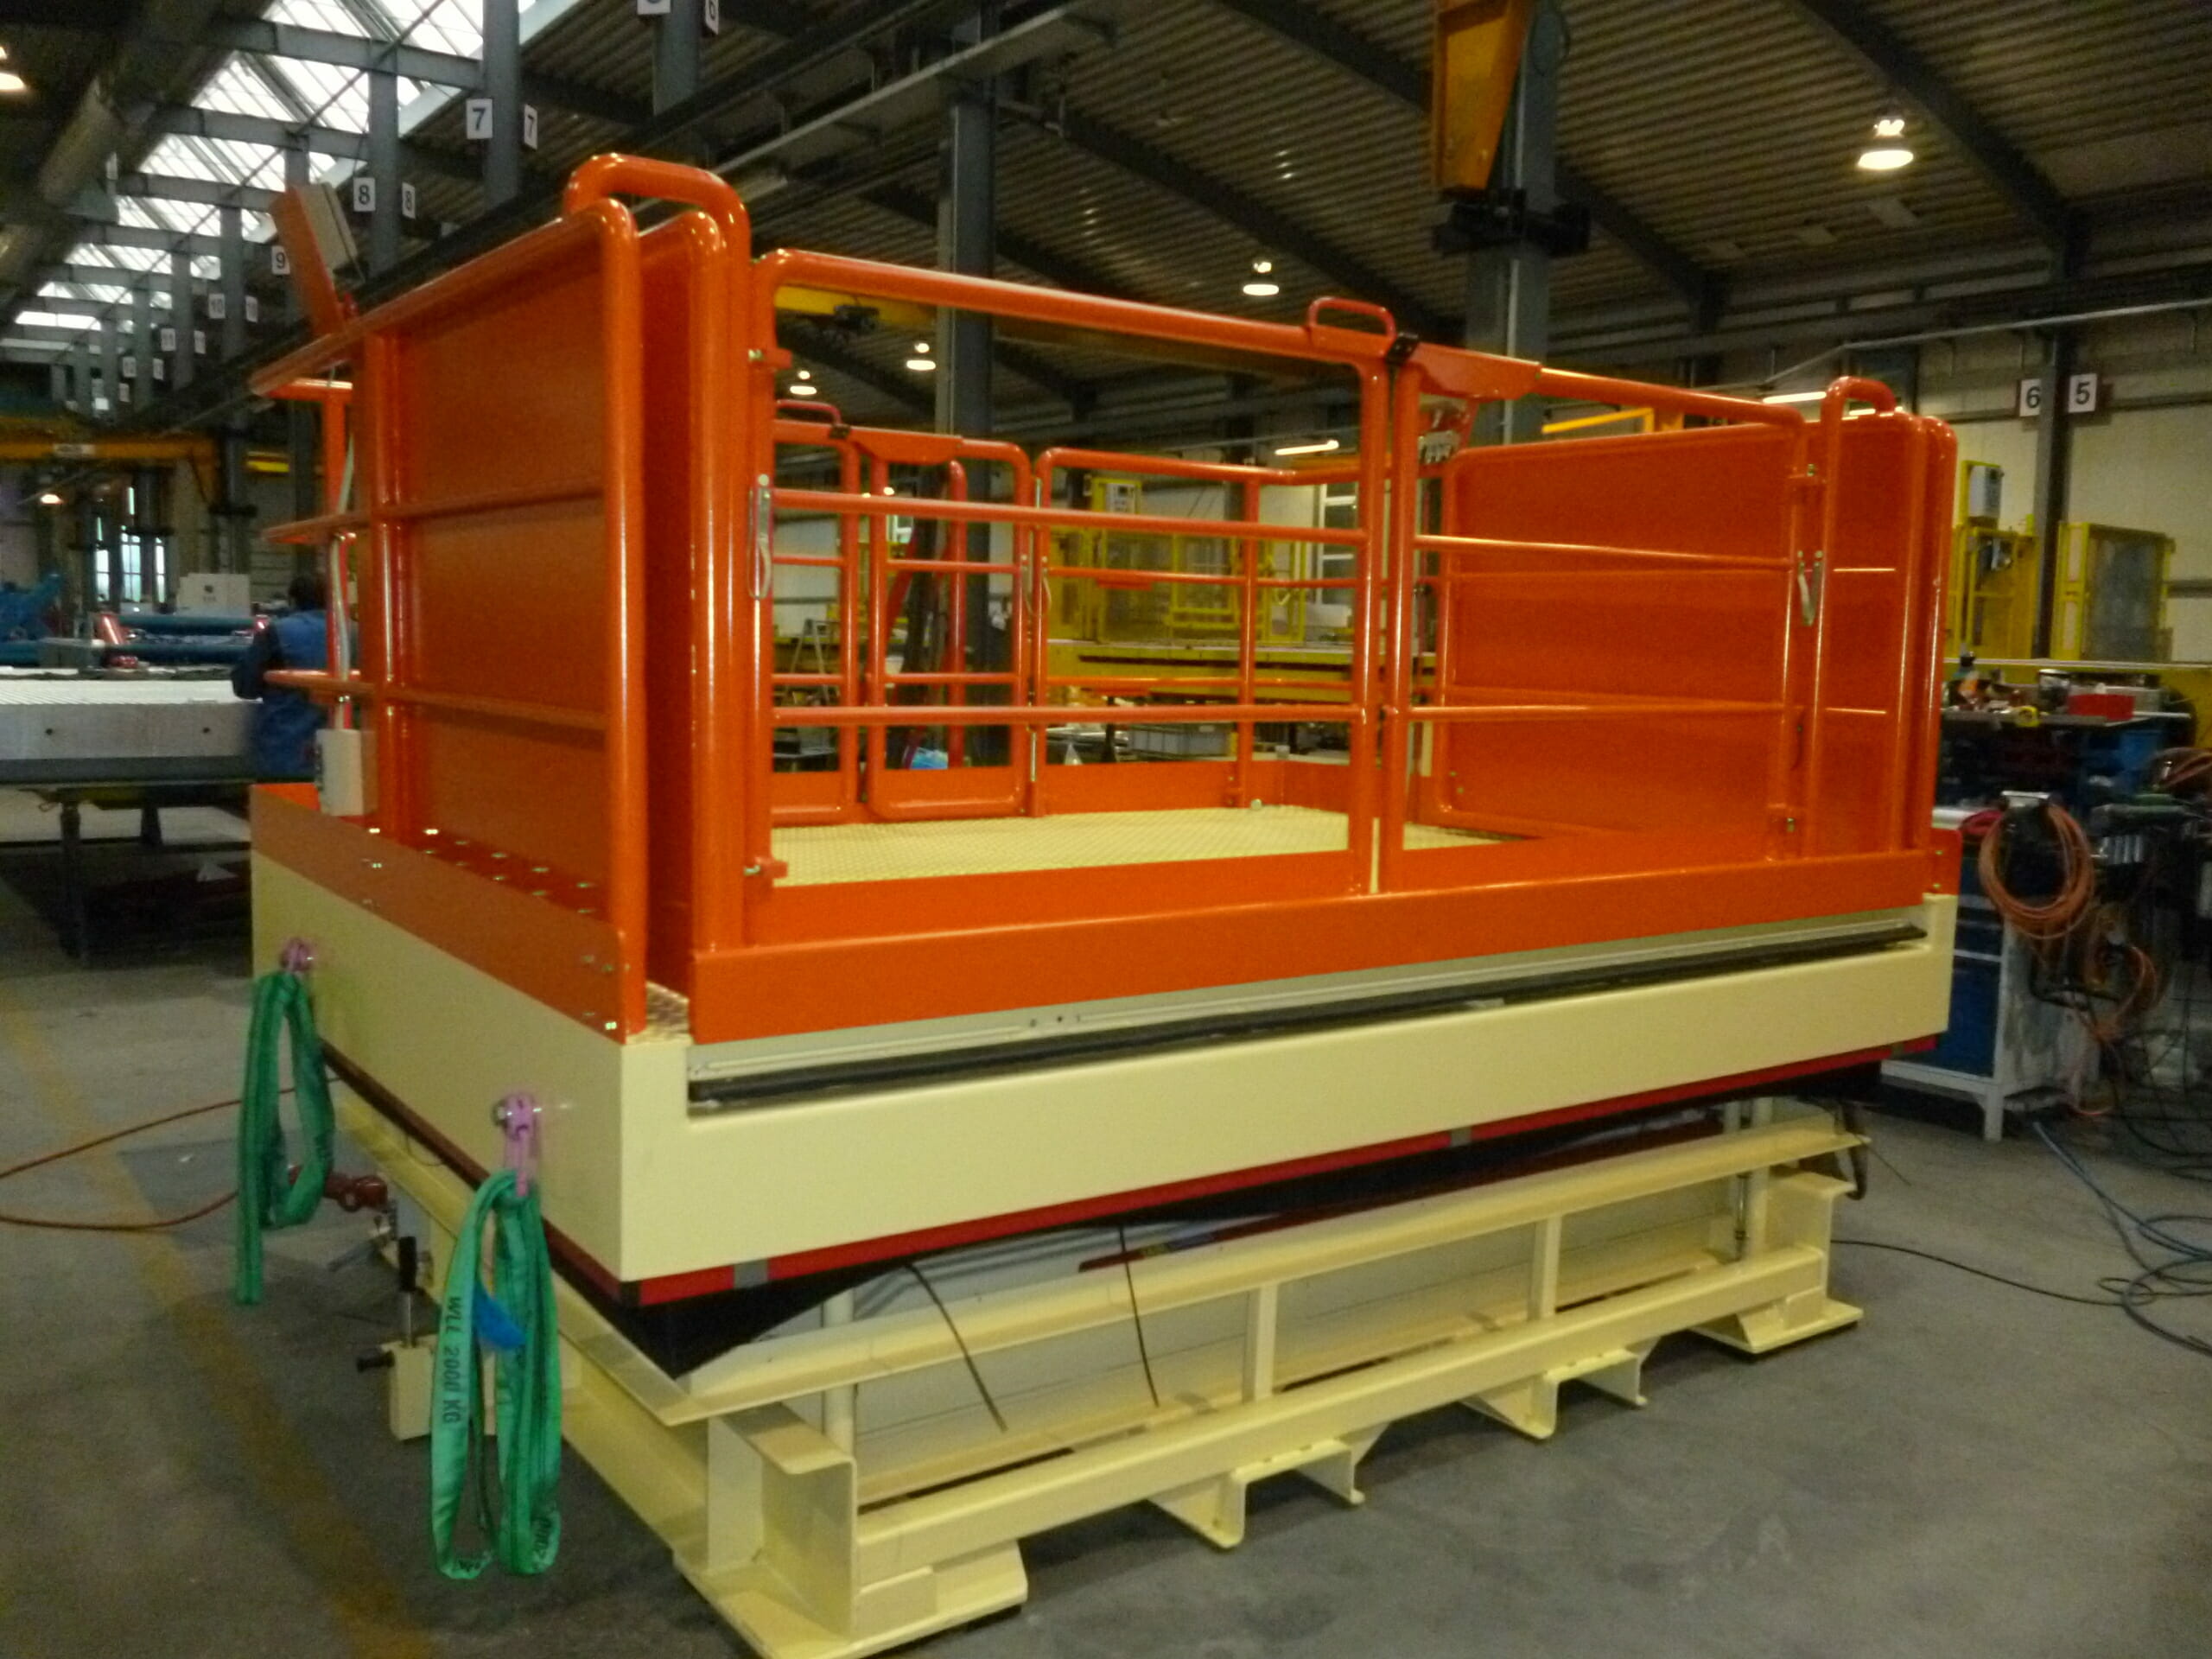 Mobile lifting platform in orange